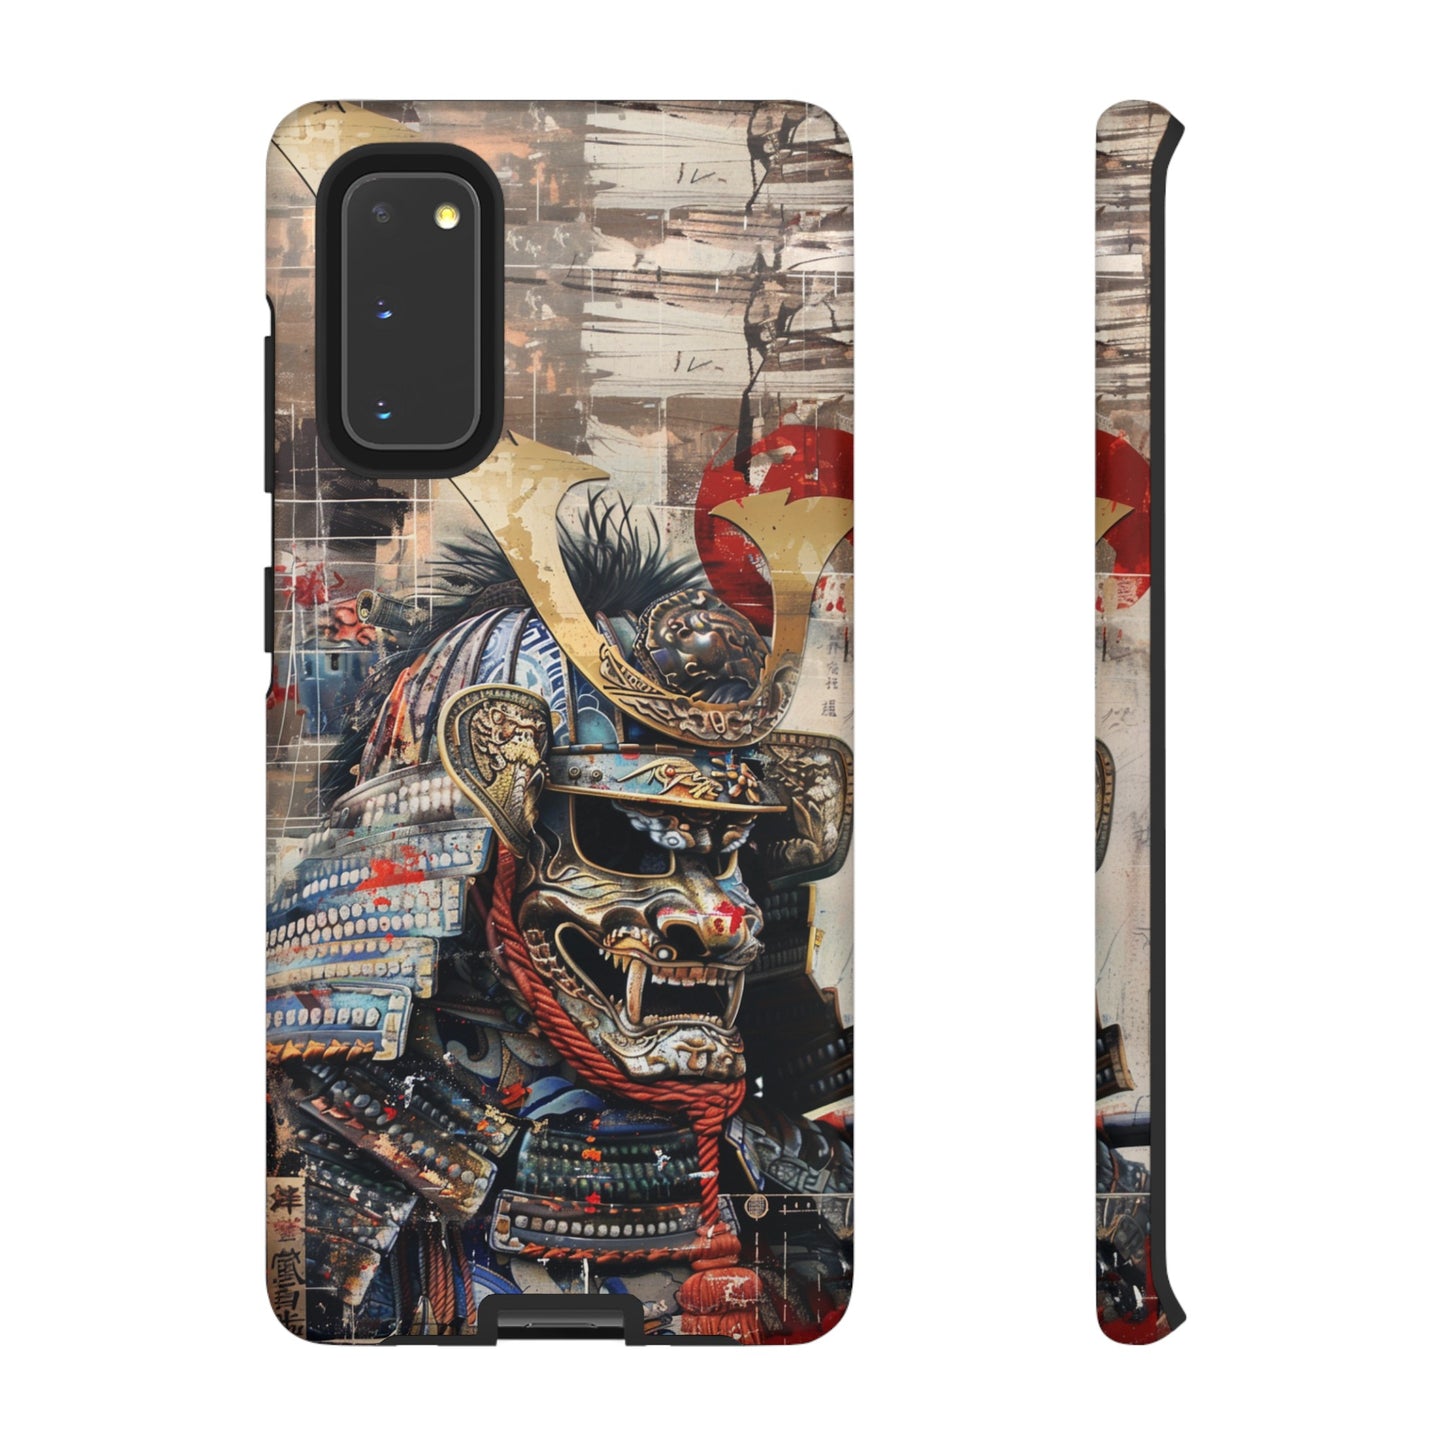 Samurai Shogun cover for iPhone 12